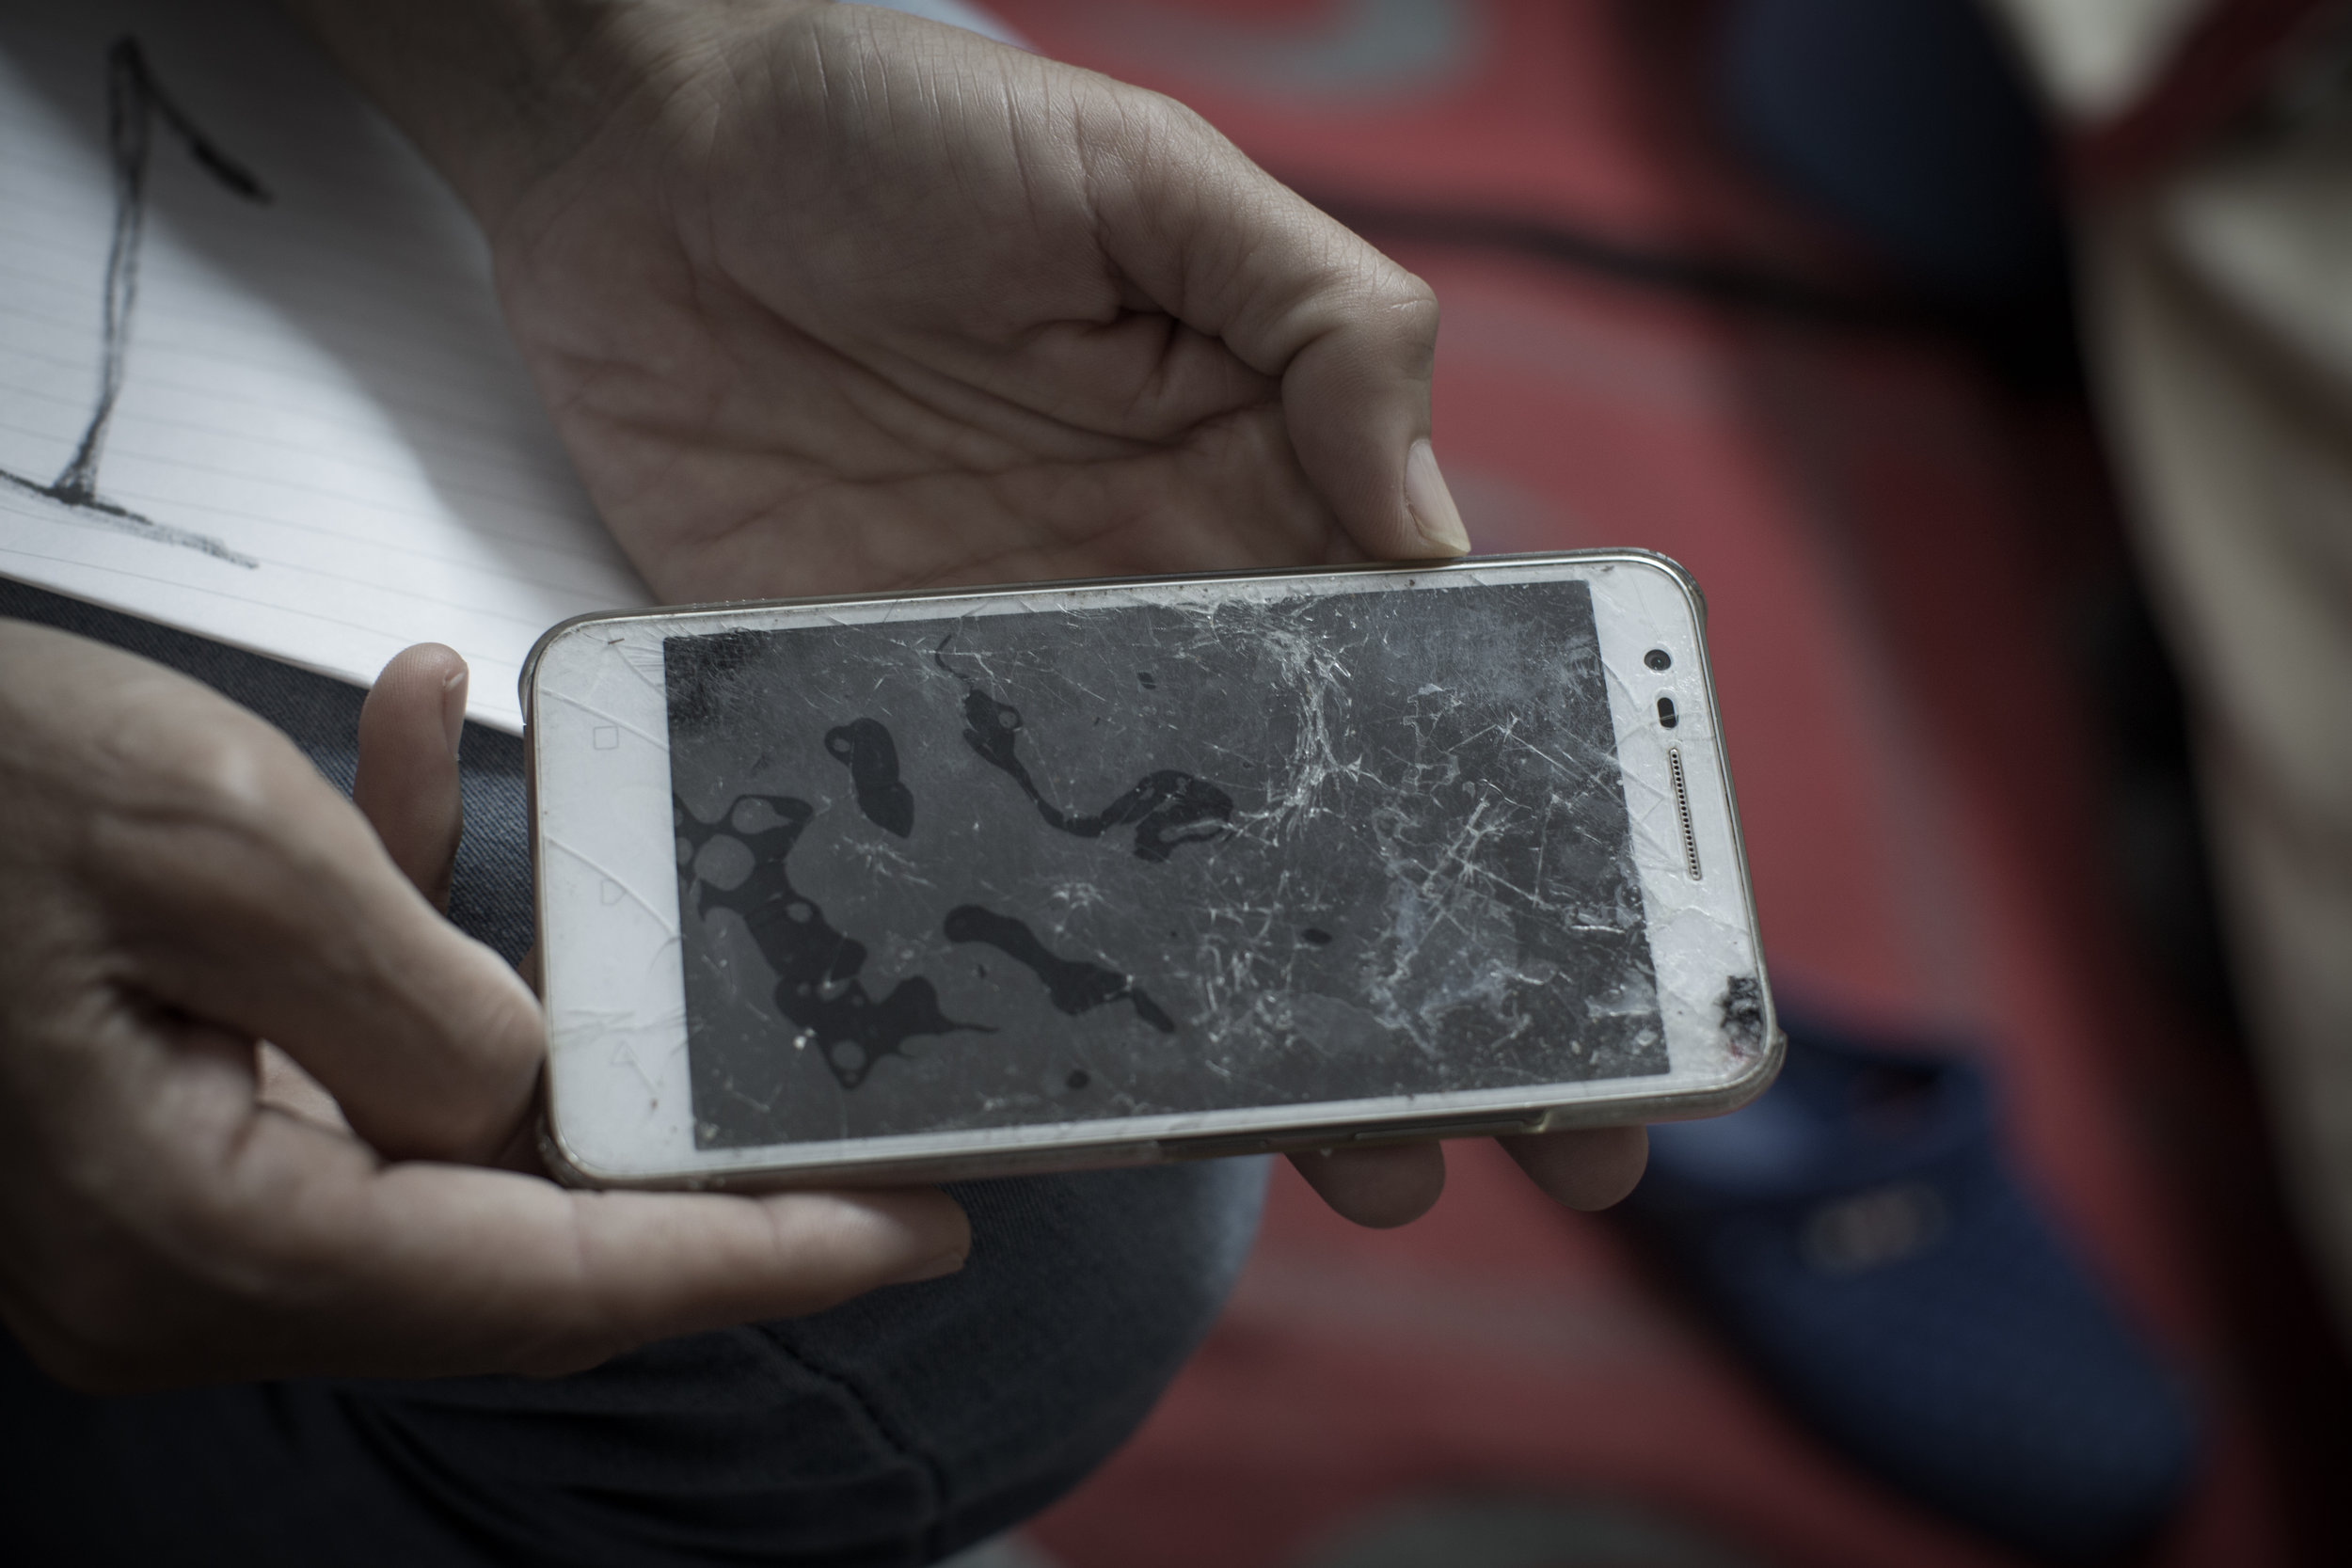  The phone of migrant, smashed by Croatian police. Bihać, BiH. 